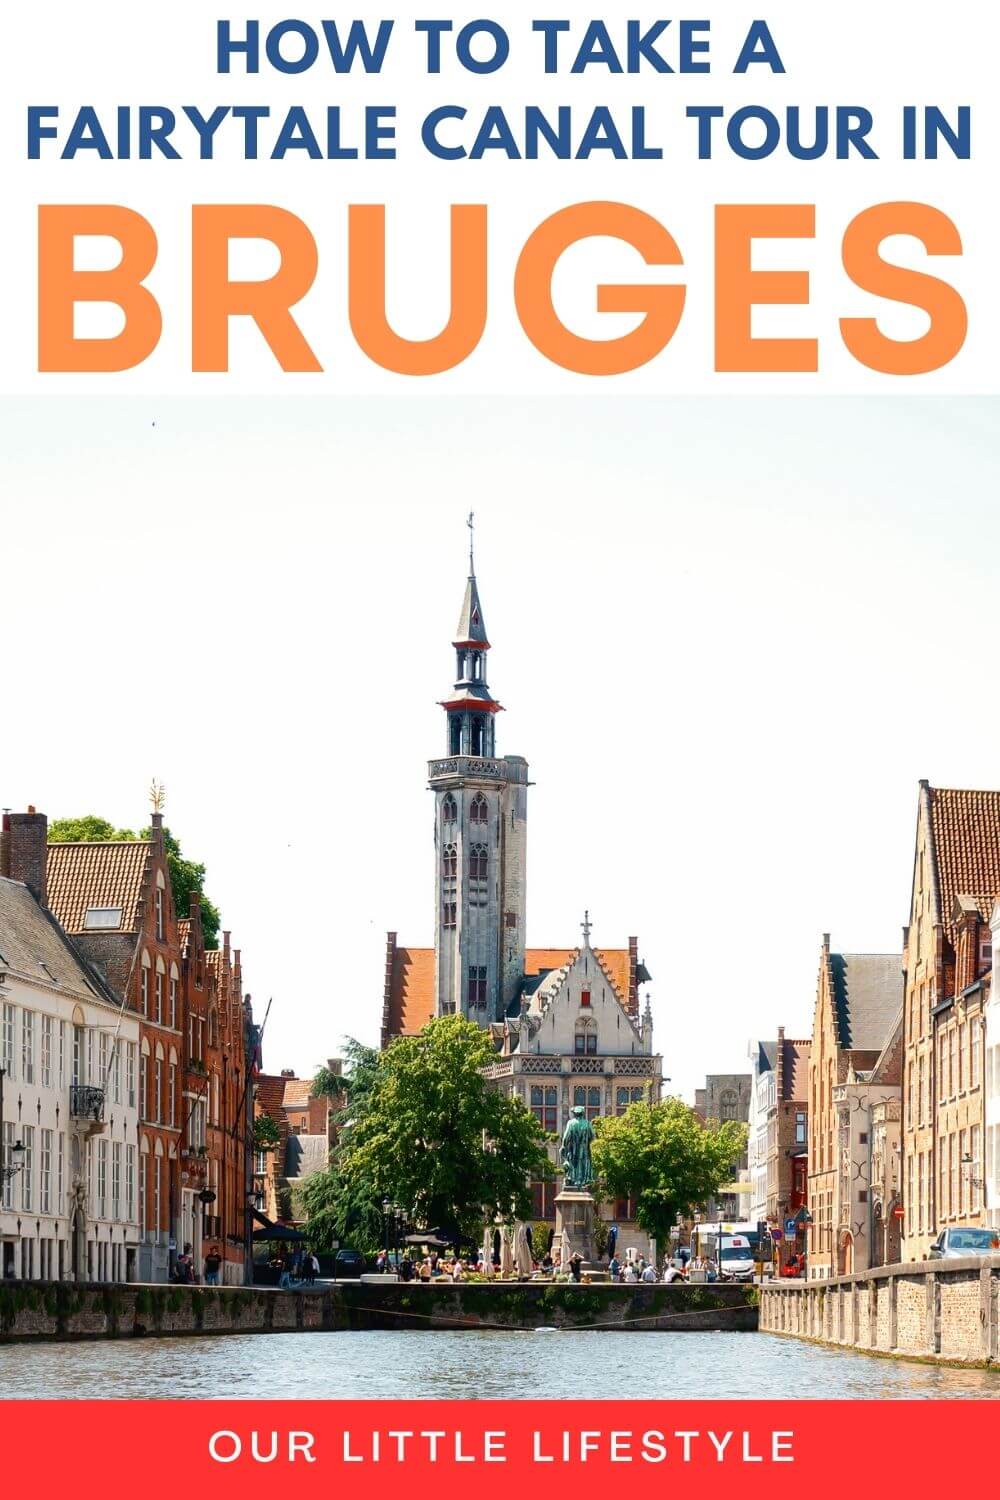 Bruges canal tours